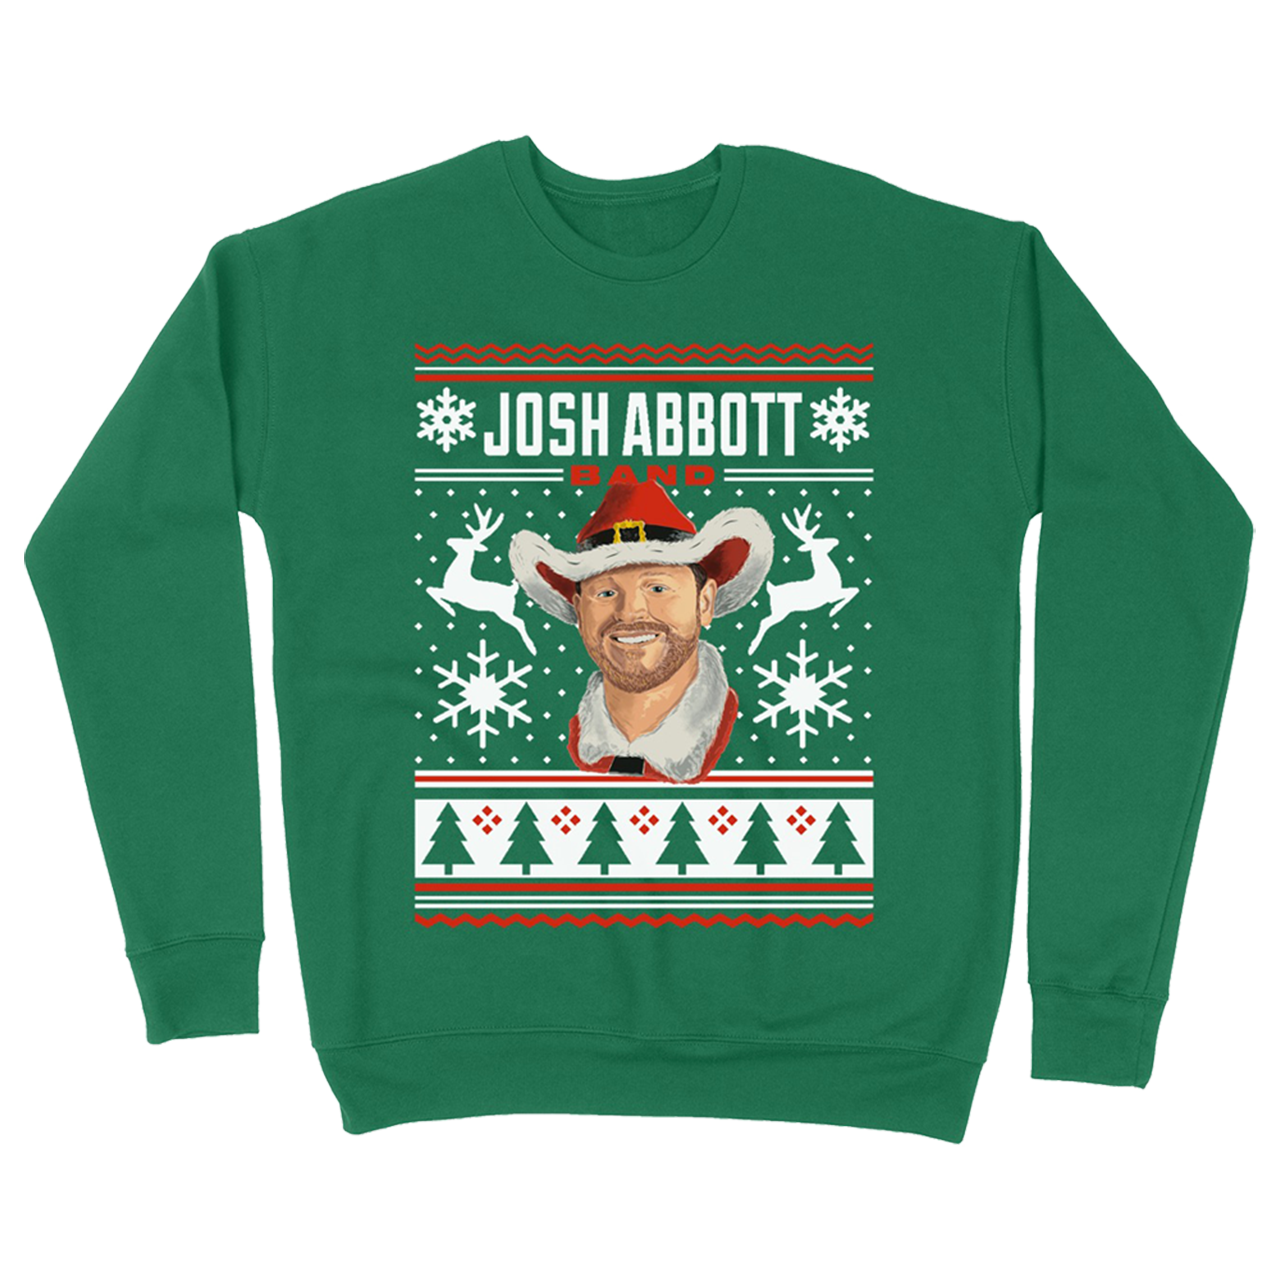 Josh Abbott Christmas Pullover